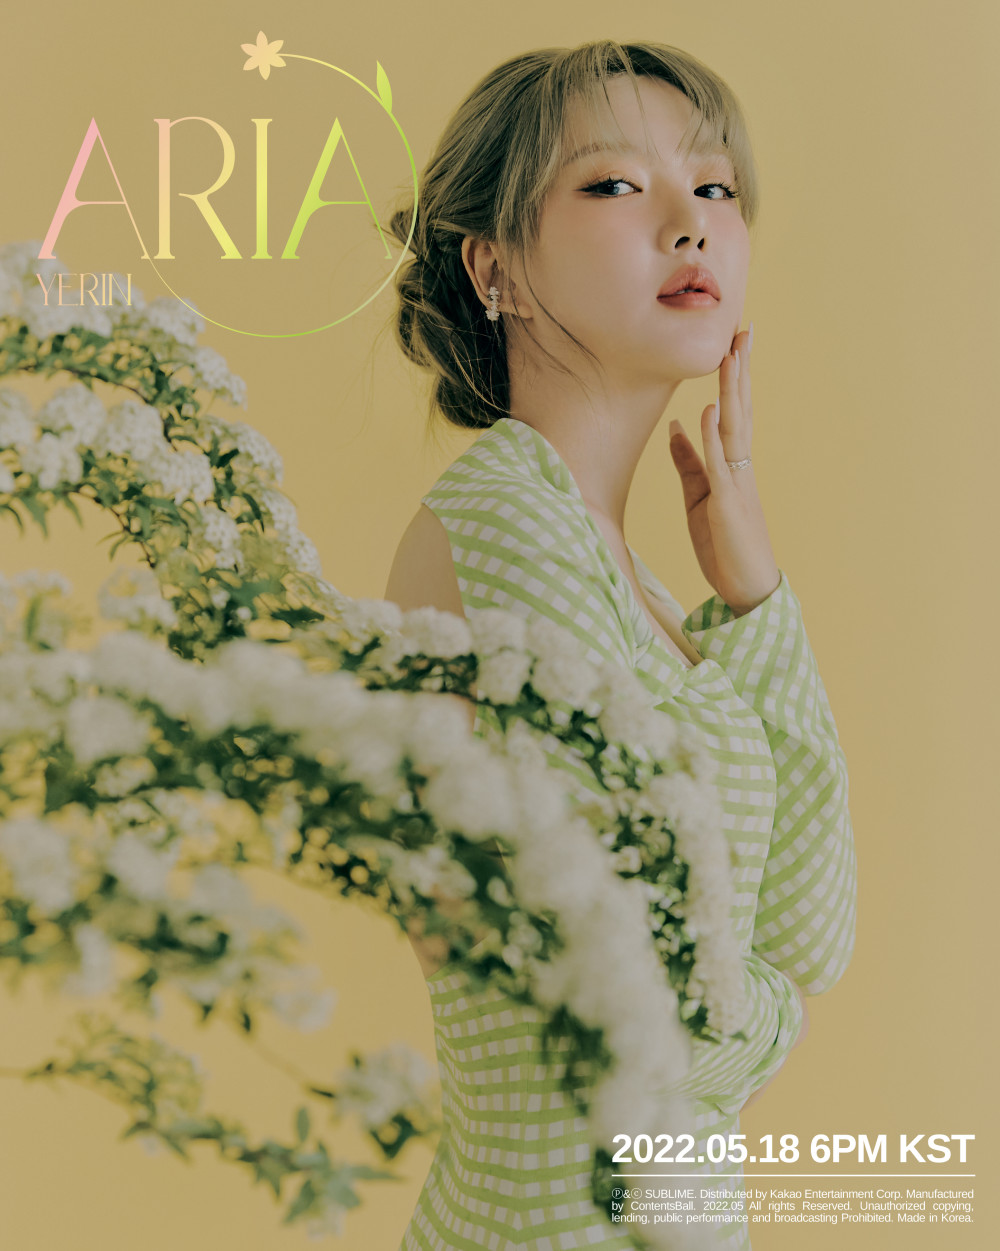 [Дебют] Йерин (GFriend) мини-альбом «ARIA»: музыкальный клип